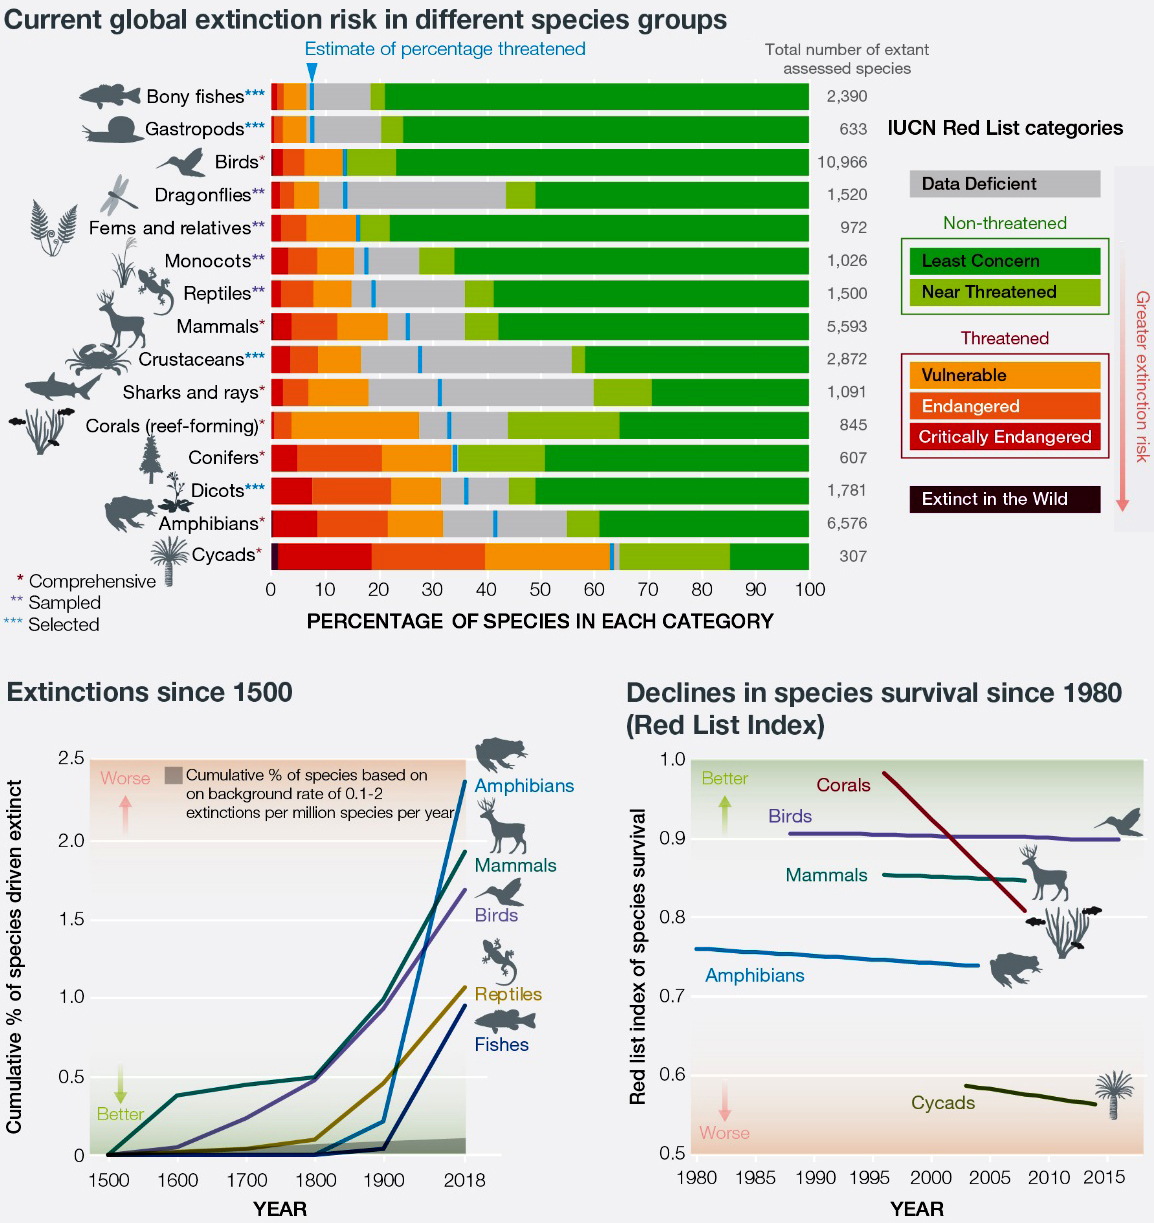 Global extincion rates in different species groups